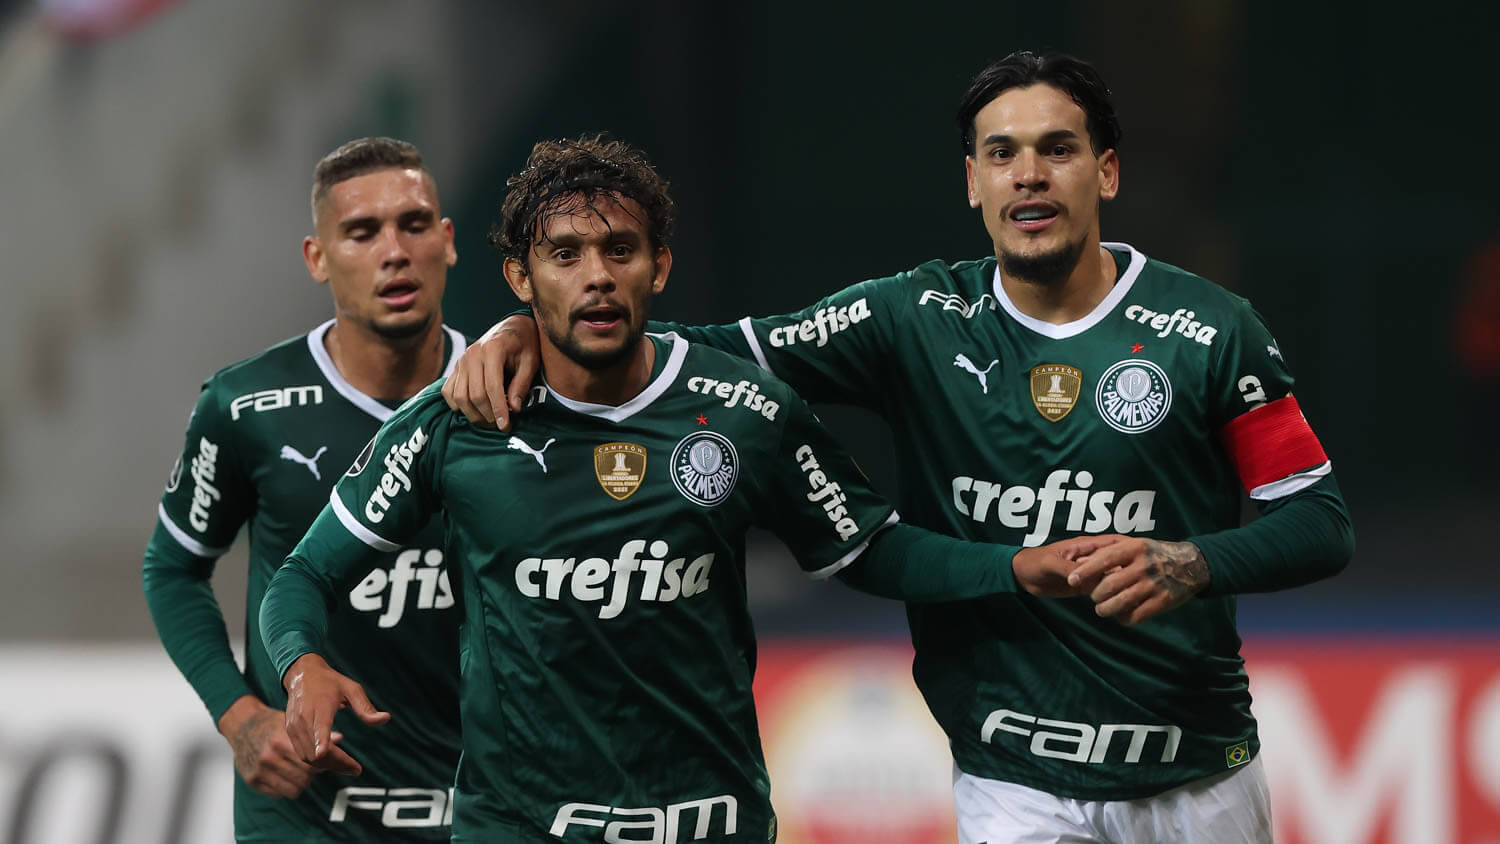 Foto: Cesar Greco / Palmeiras - 24.05.2022